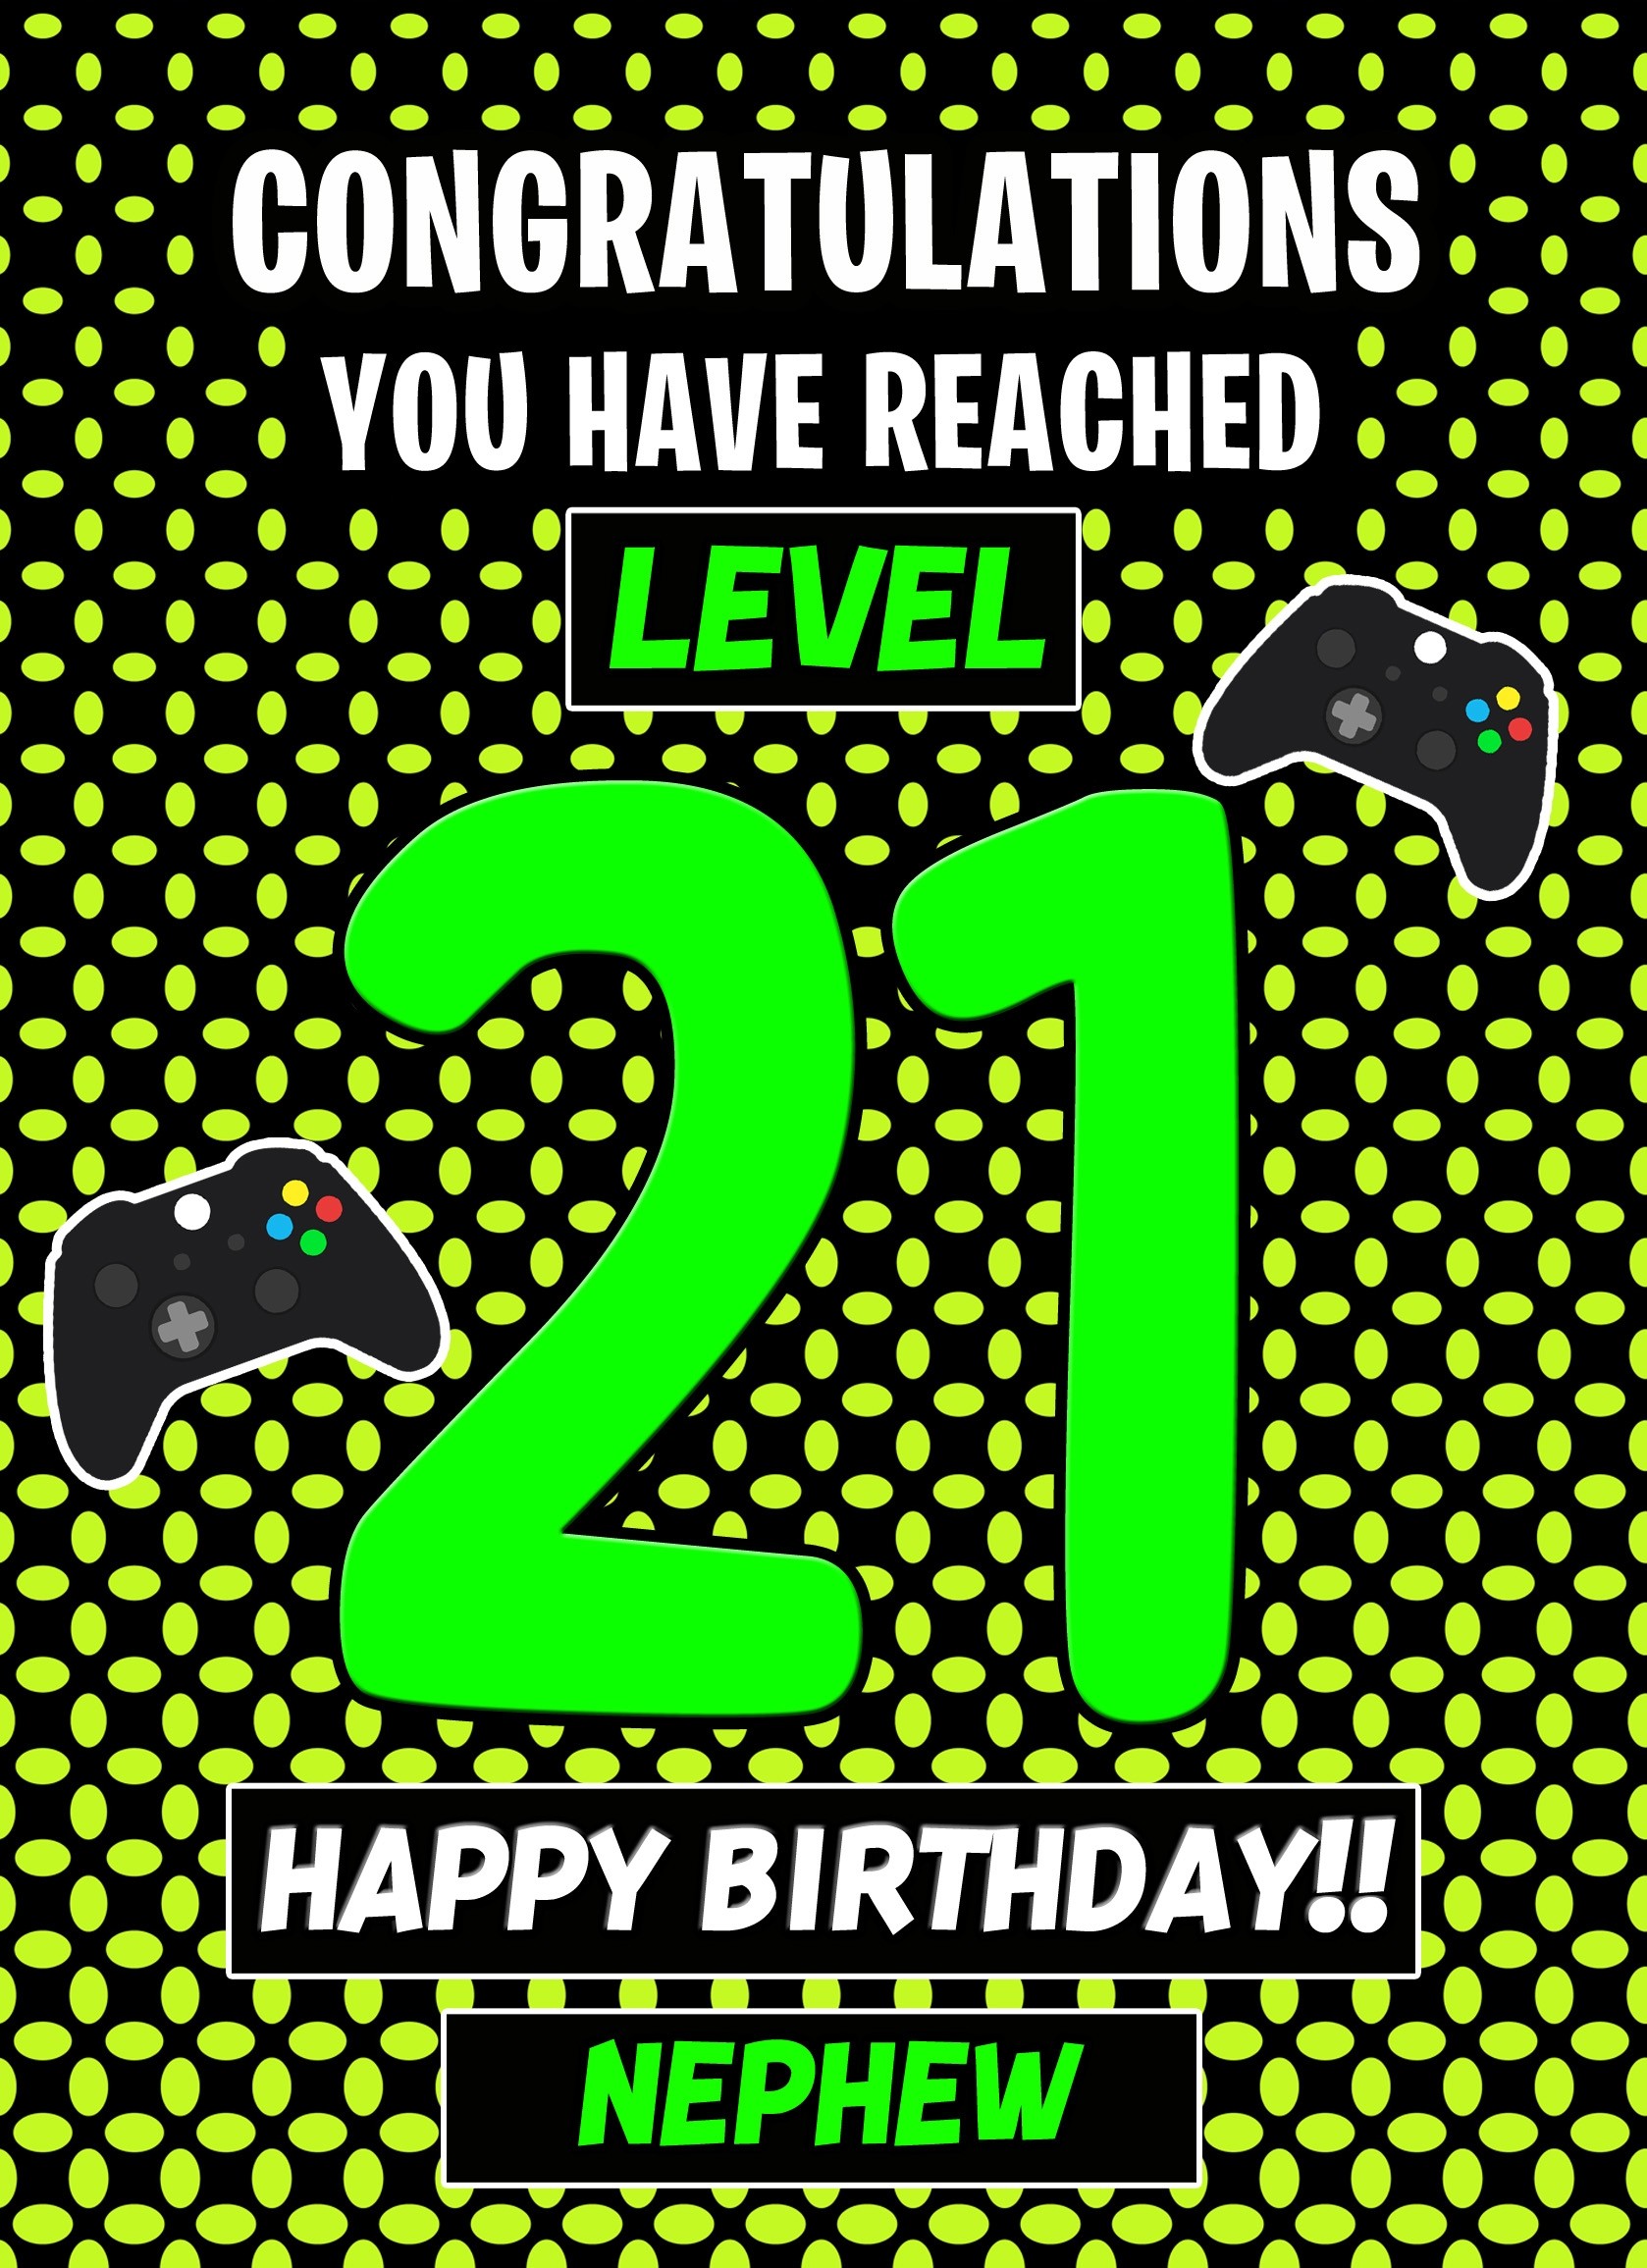 Nephew 21st Birthday Card (Level Up Gamer)